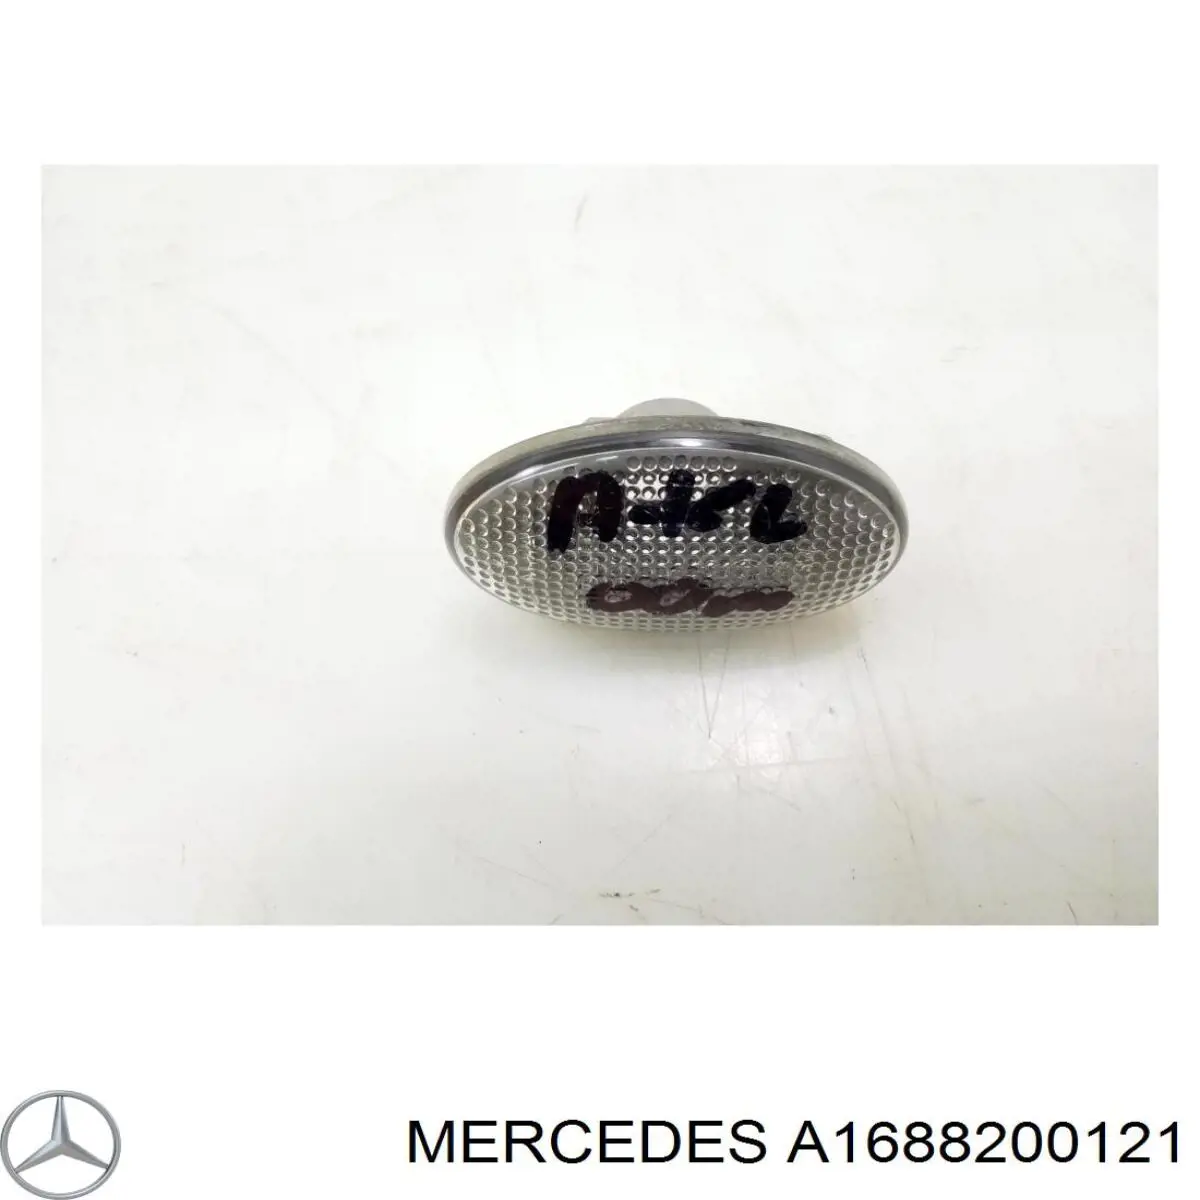 A1688200121 Mercedes luz intermitente guardabarros